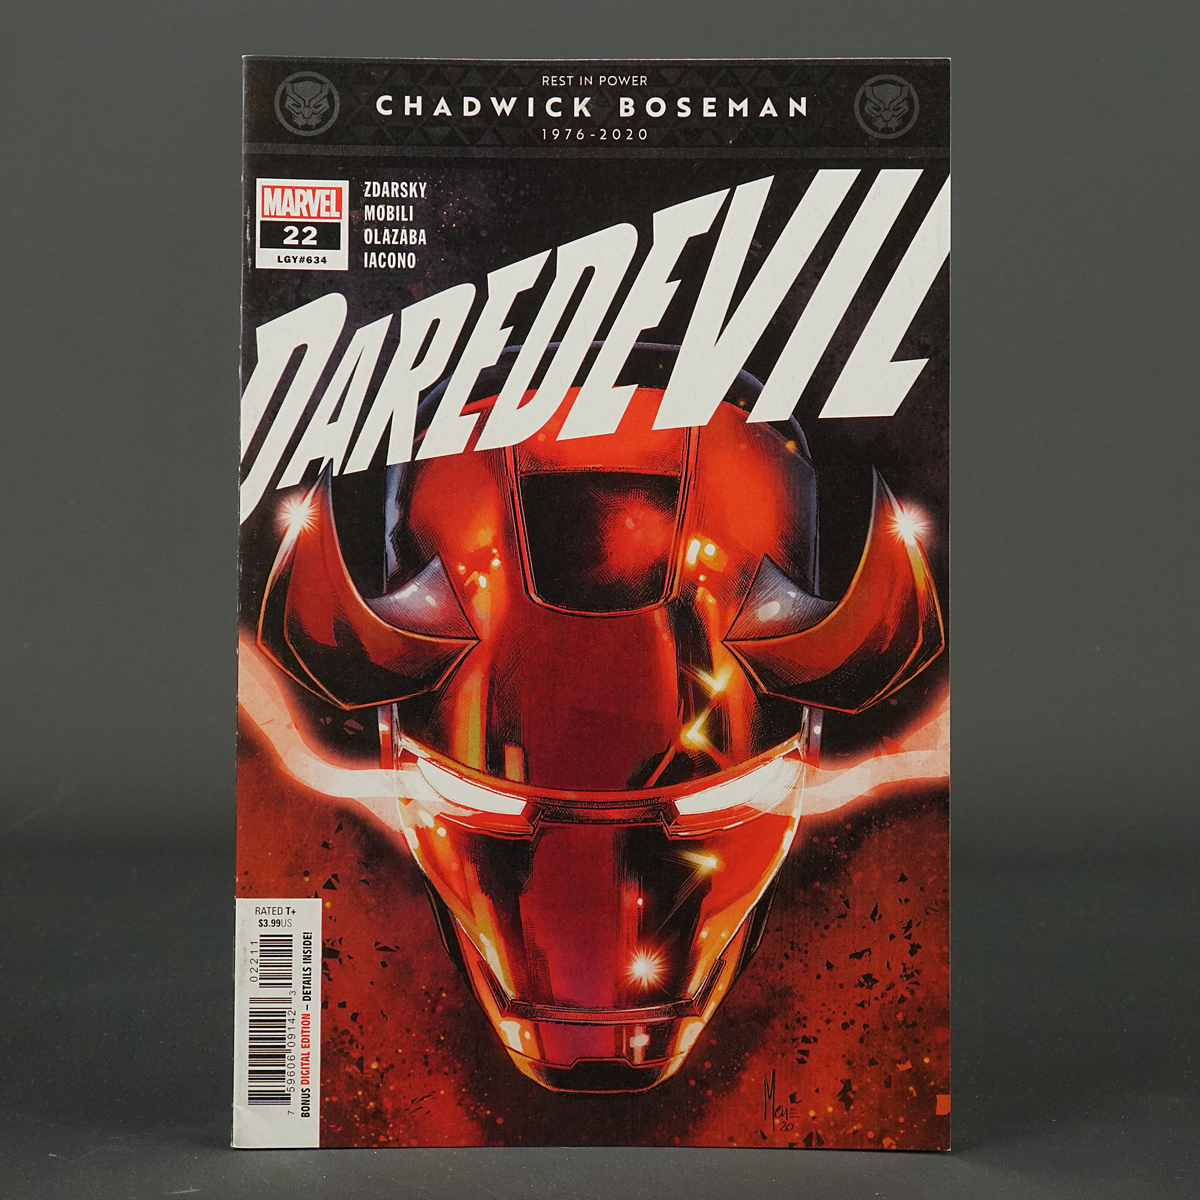 DAREDEVIL #22 Marvel Comics 2020 APR201034 (W) Zdarsky (CA) Checchetto 220817C